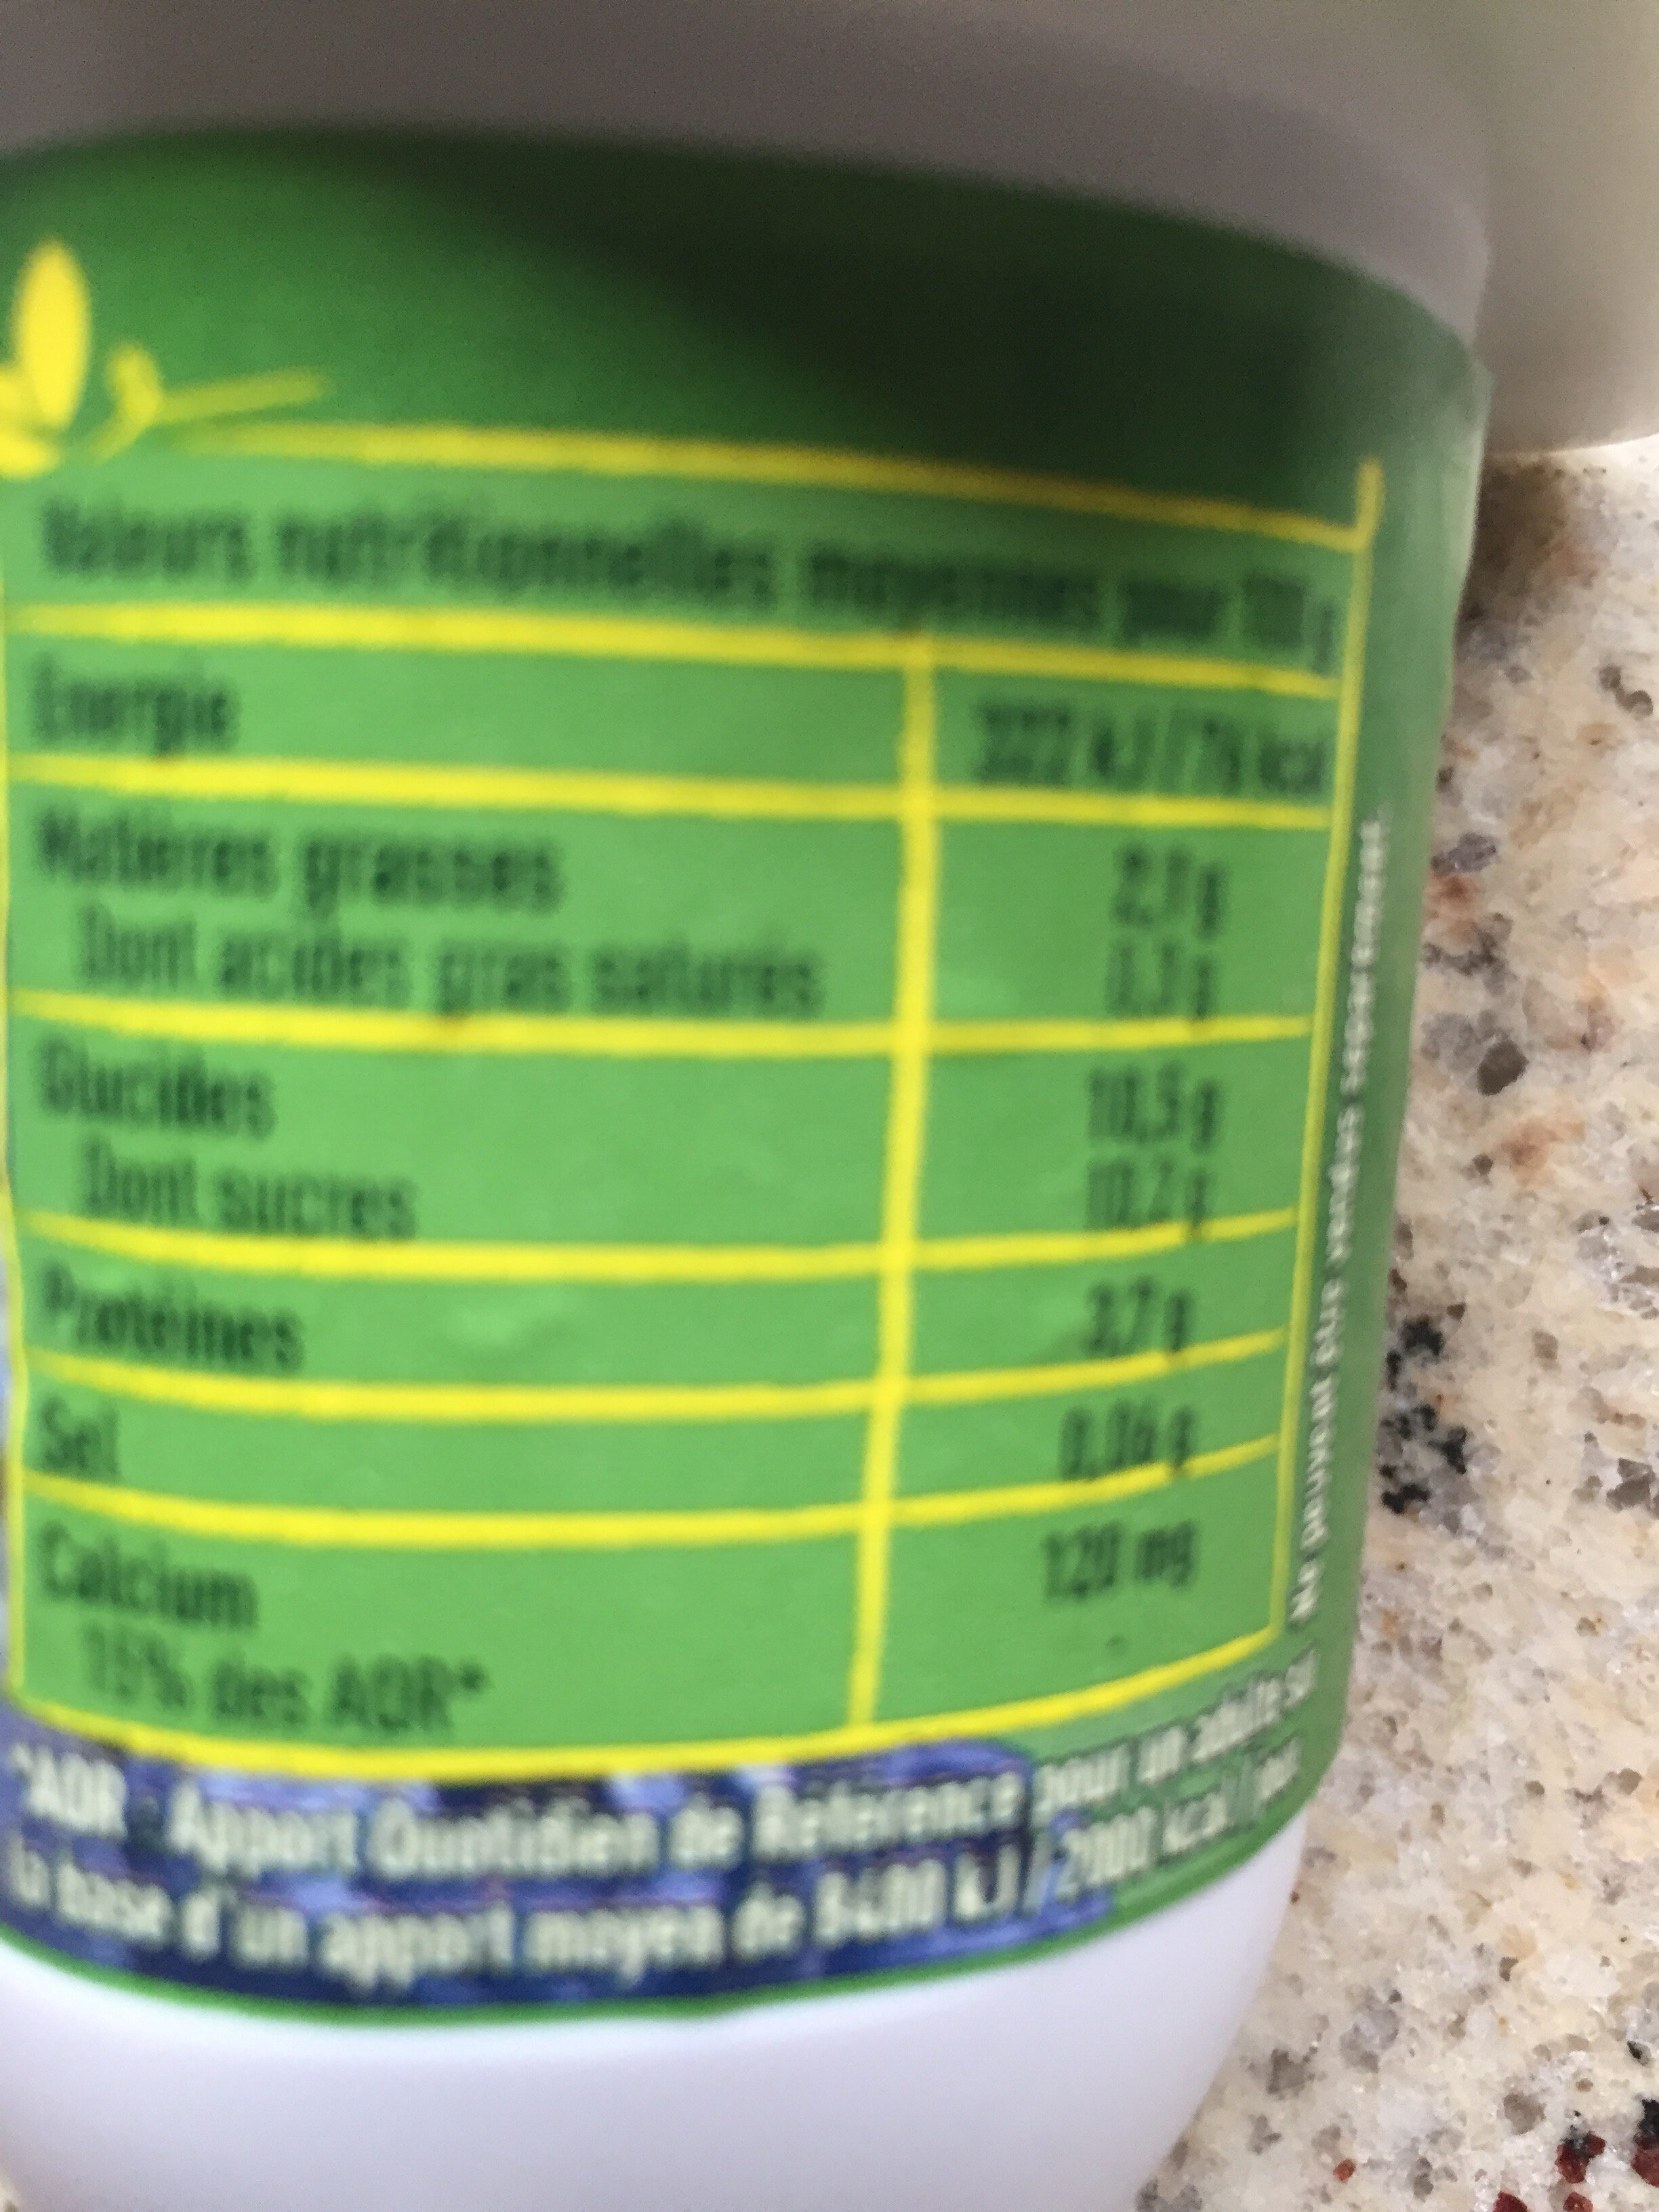 Soja myrtille 4×100 g - Tableau nutritionnel